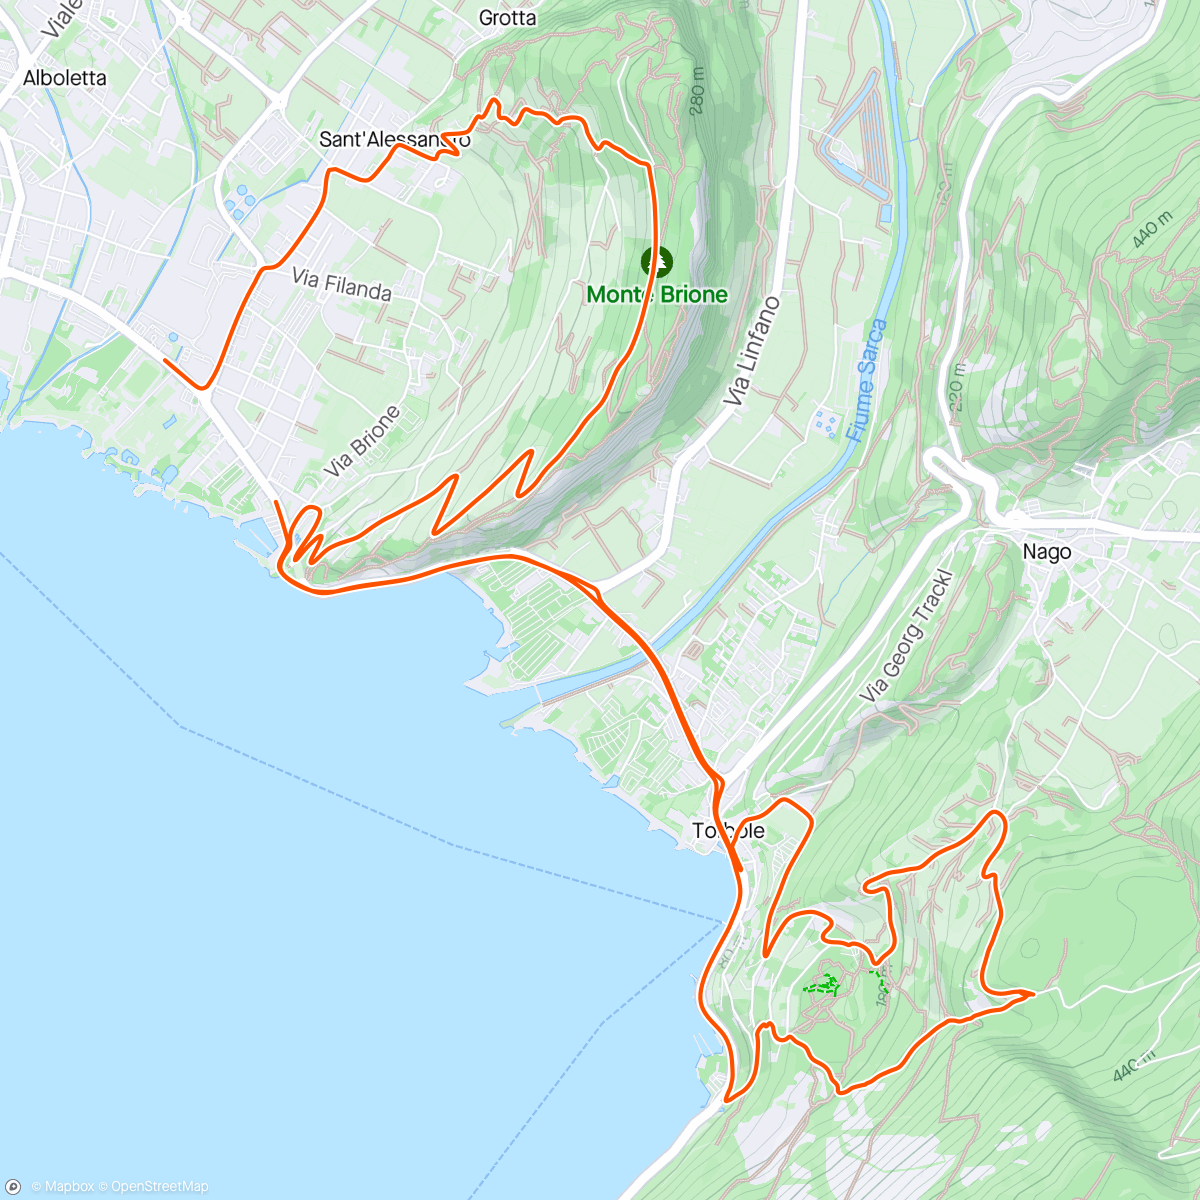 Map of the activity, Riva bike festival